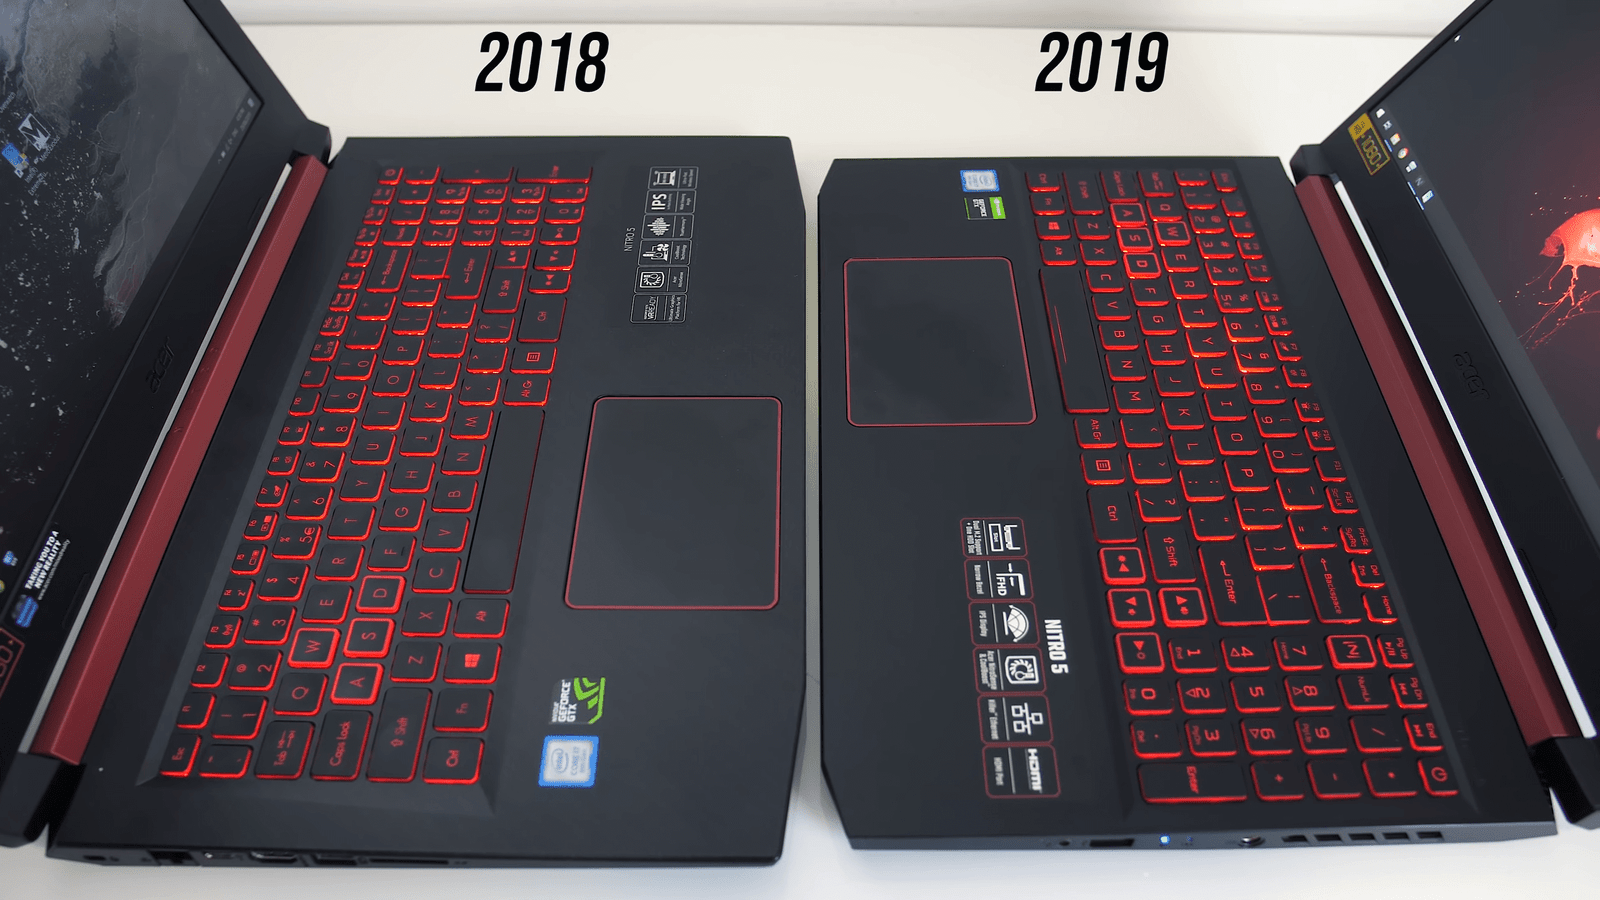 Acer Nitro 5 2019 vs 2018 Keyboard